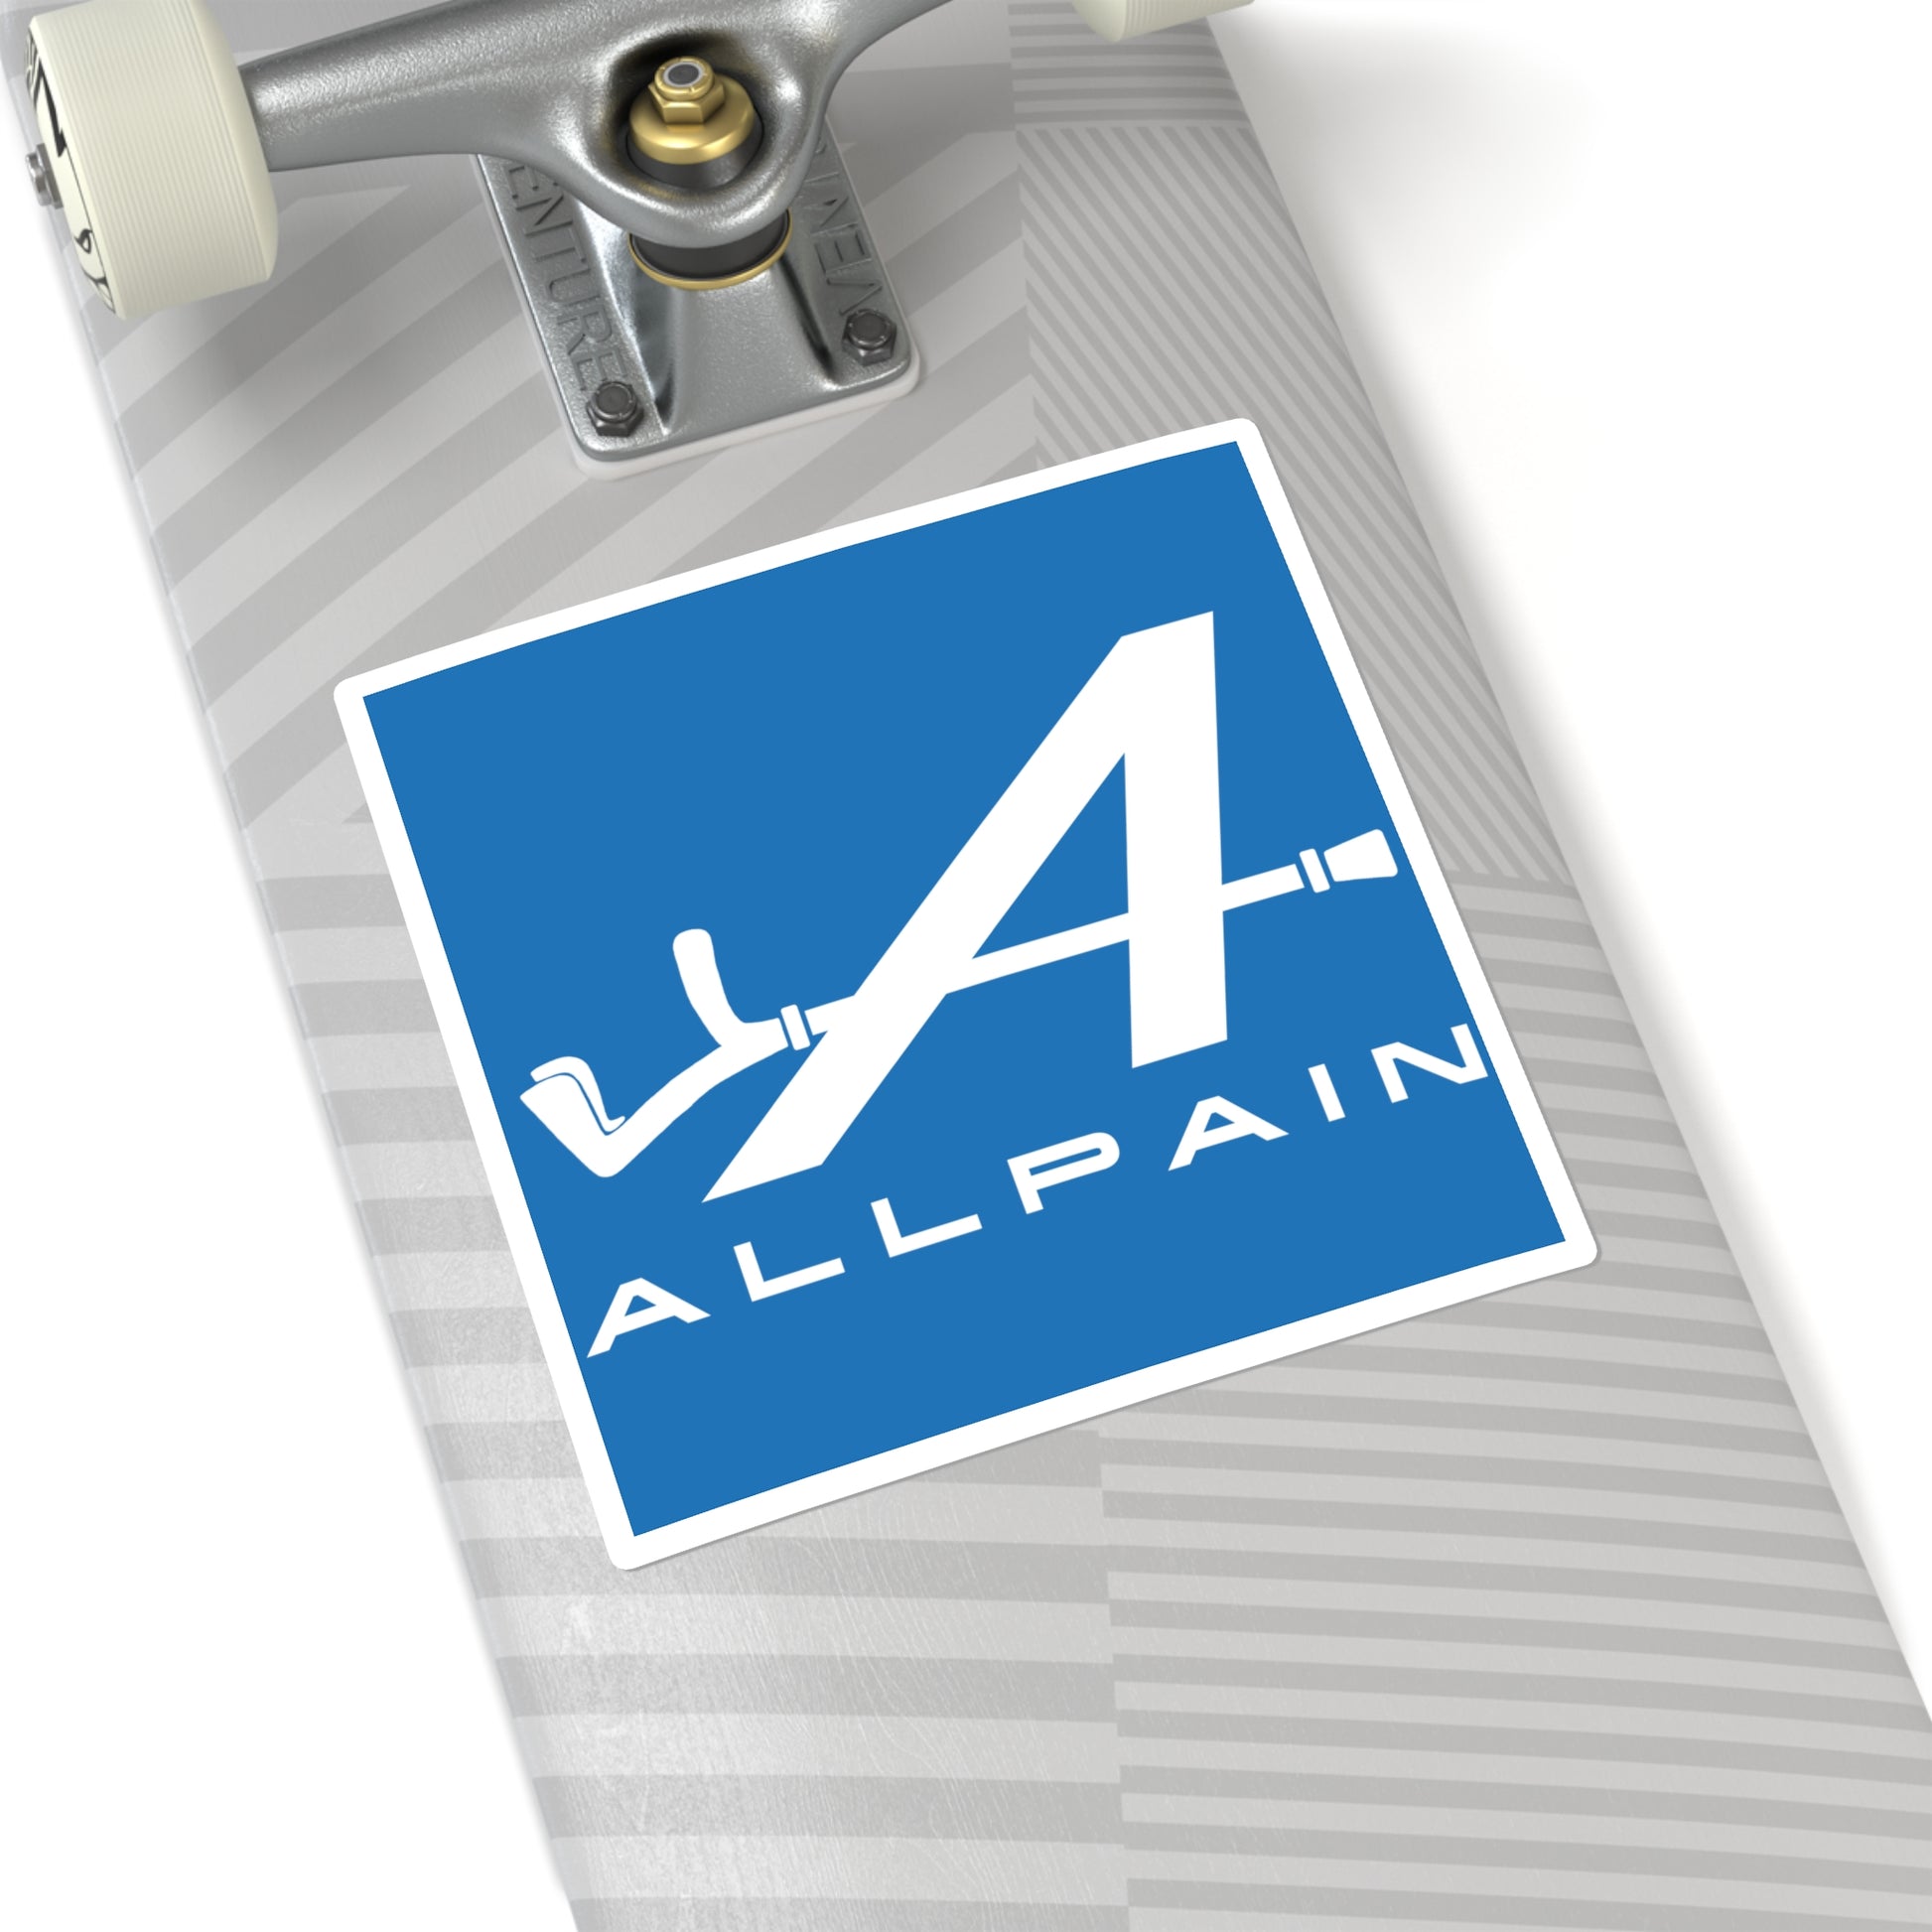 Allpain Alpine F1 Formula 1 Pierre Gasly Esteban Ocon Square Sticker Next Cult Brand Alpine, F1